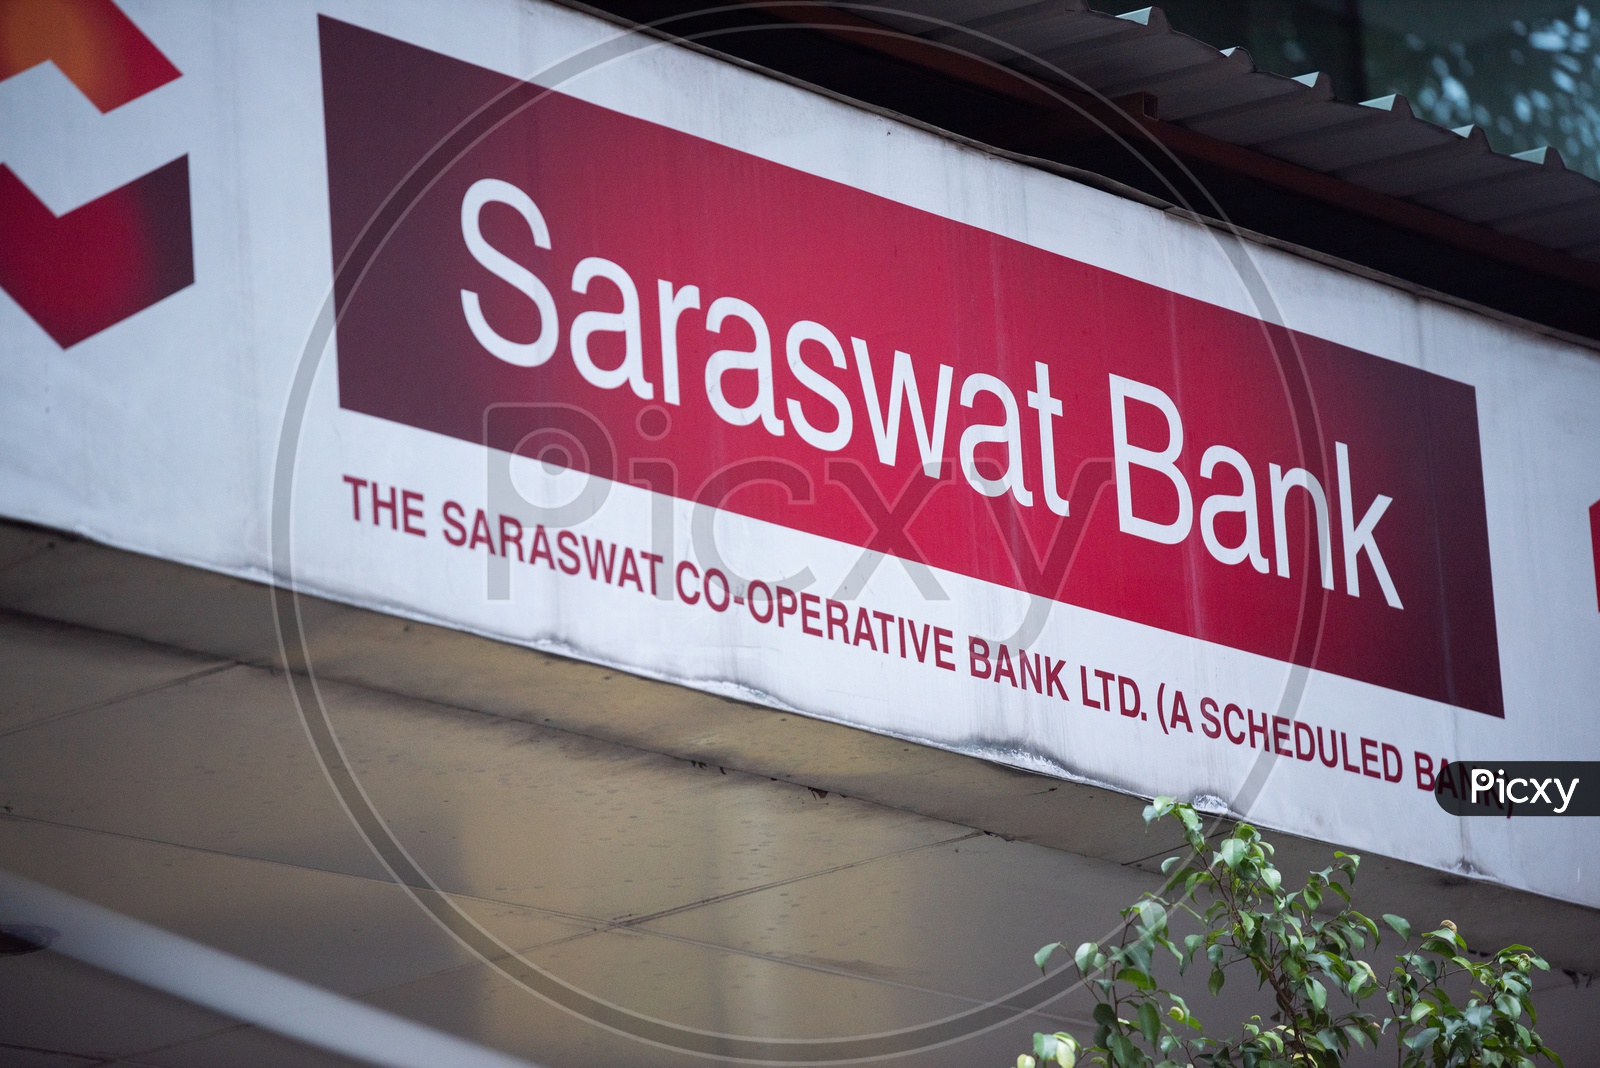 The Saraswat Co-Operative Bank Ltd.